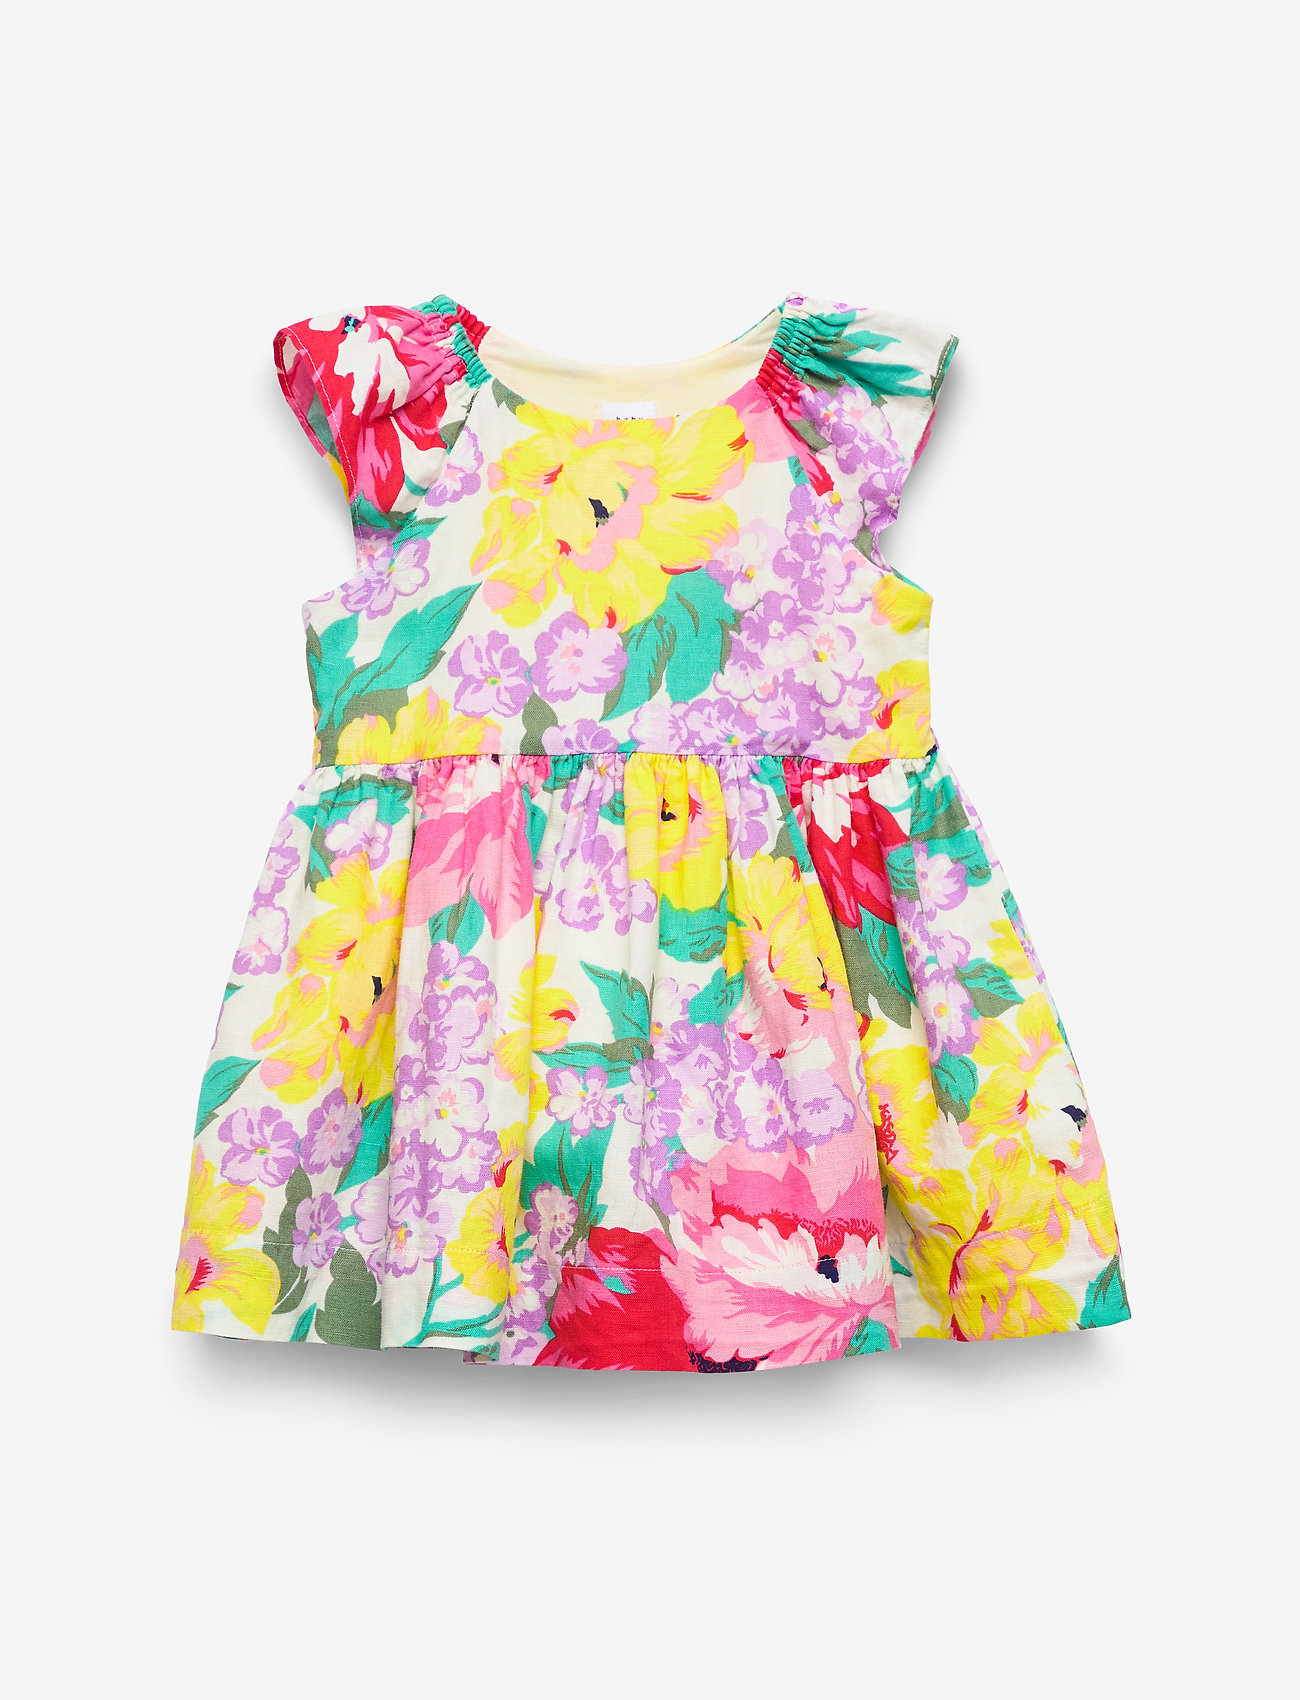 gap toddler dresses